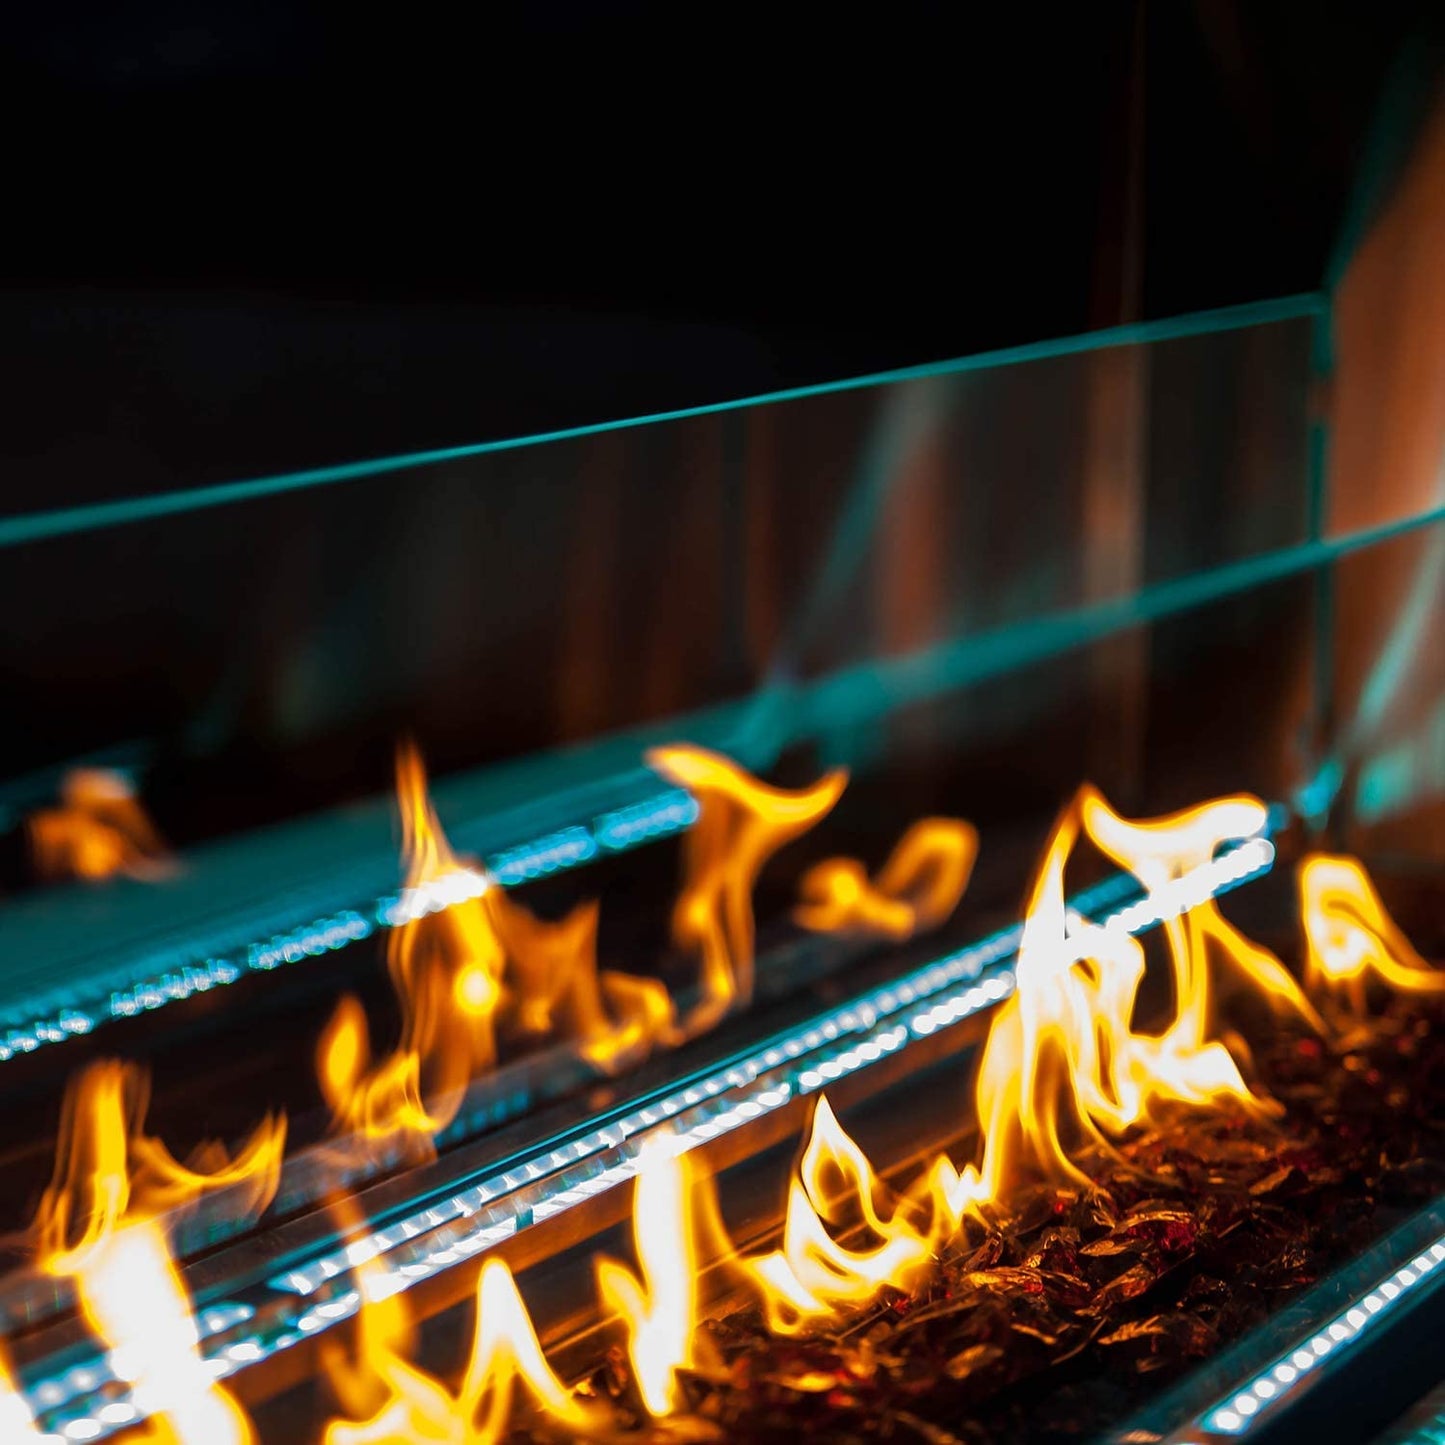 Firegear Gas Fireplace Kalea Bay  Fireplace with LED Lights and Fireglass (NG)